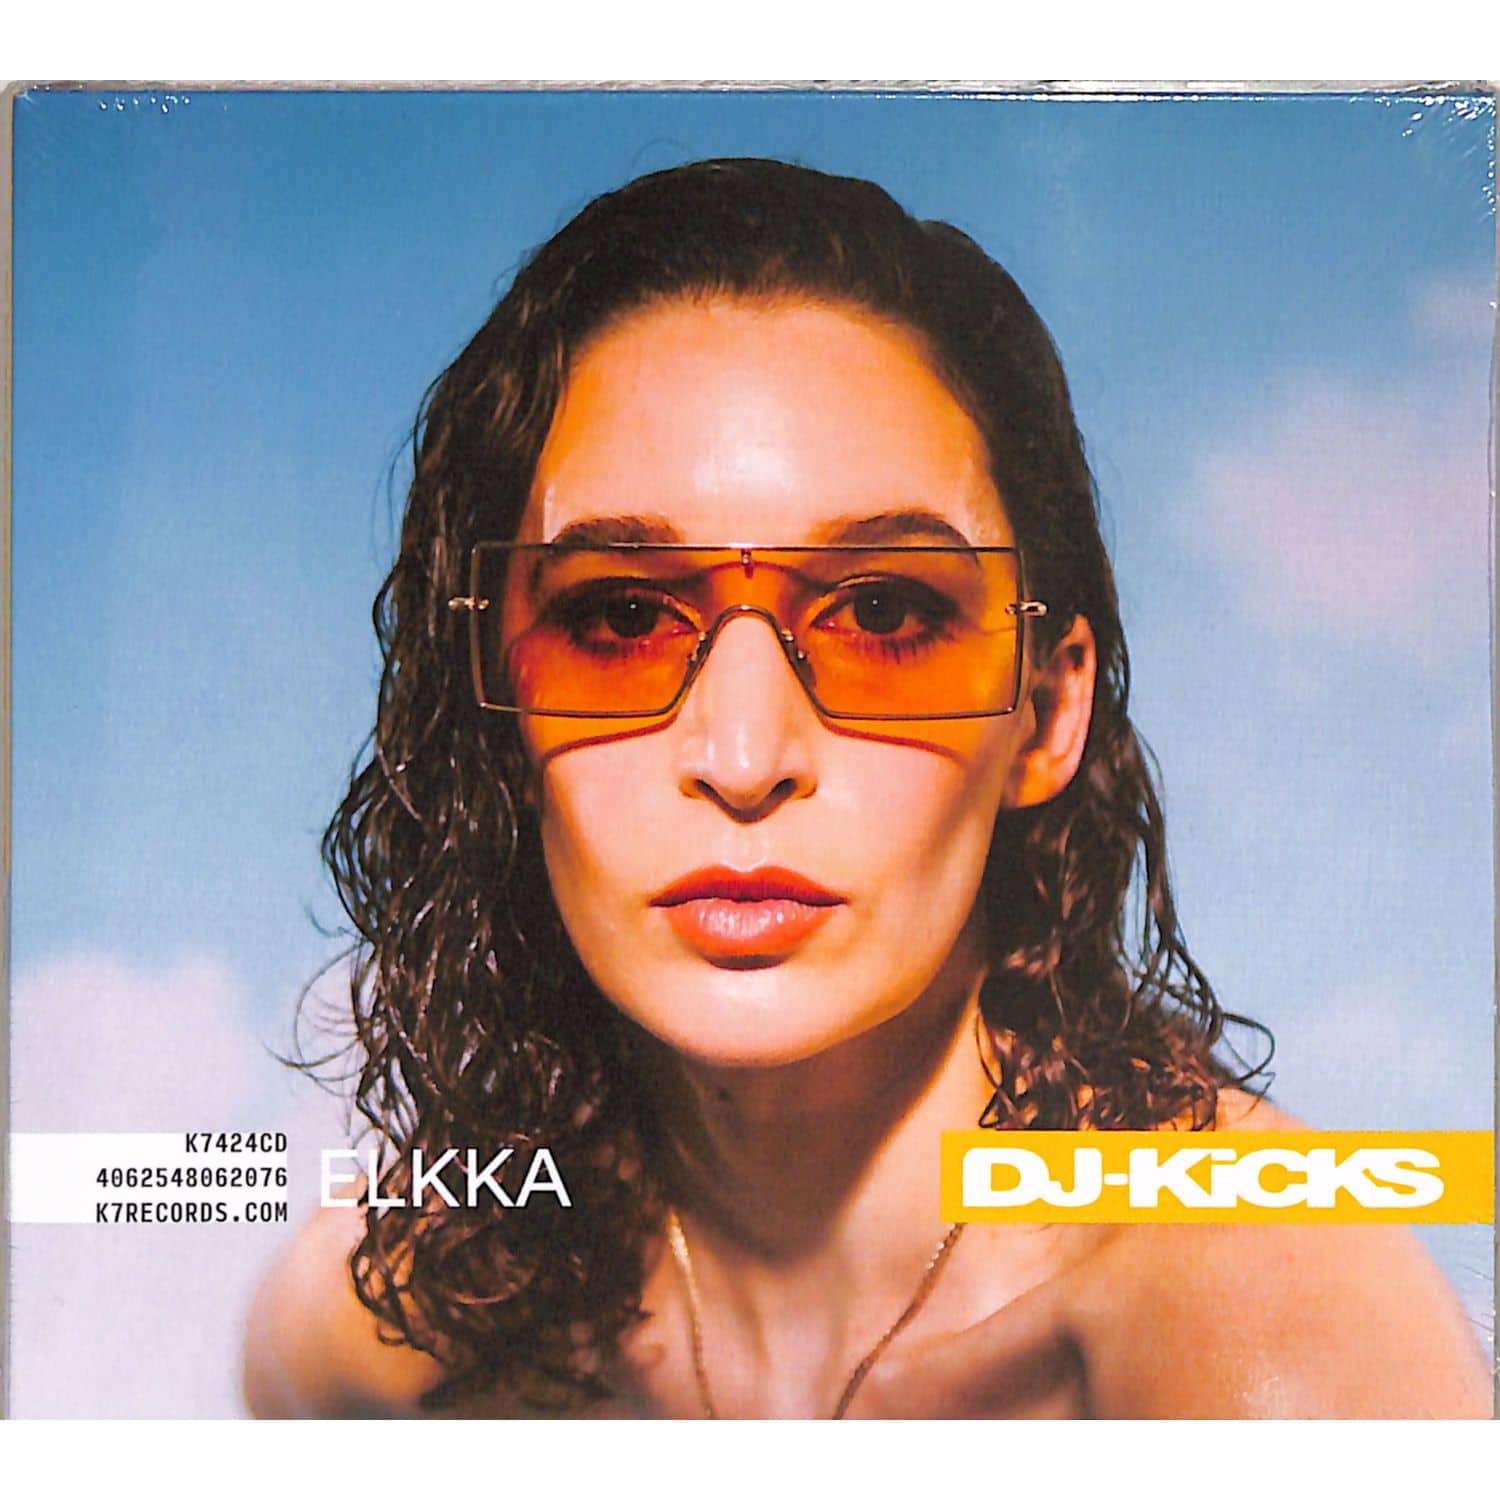 Elkka - DJ-KICKS 